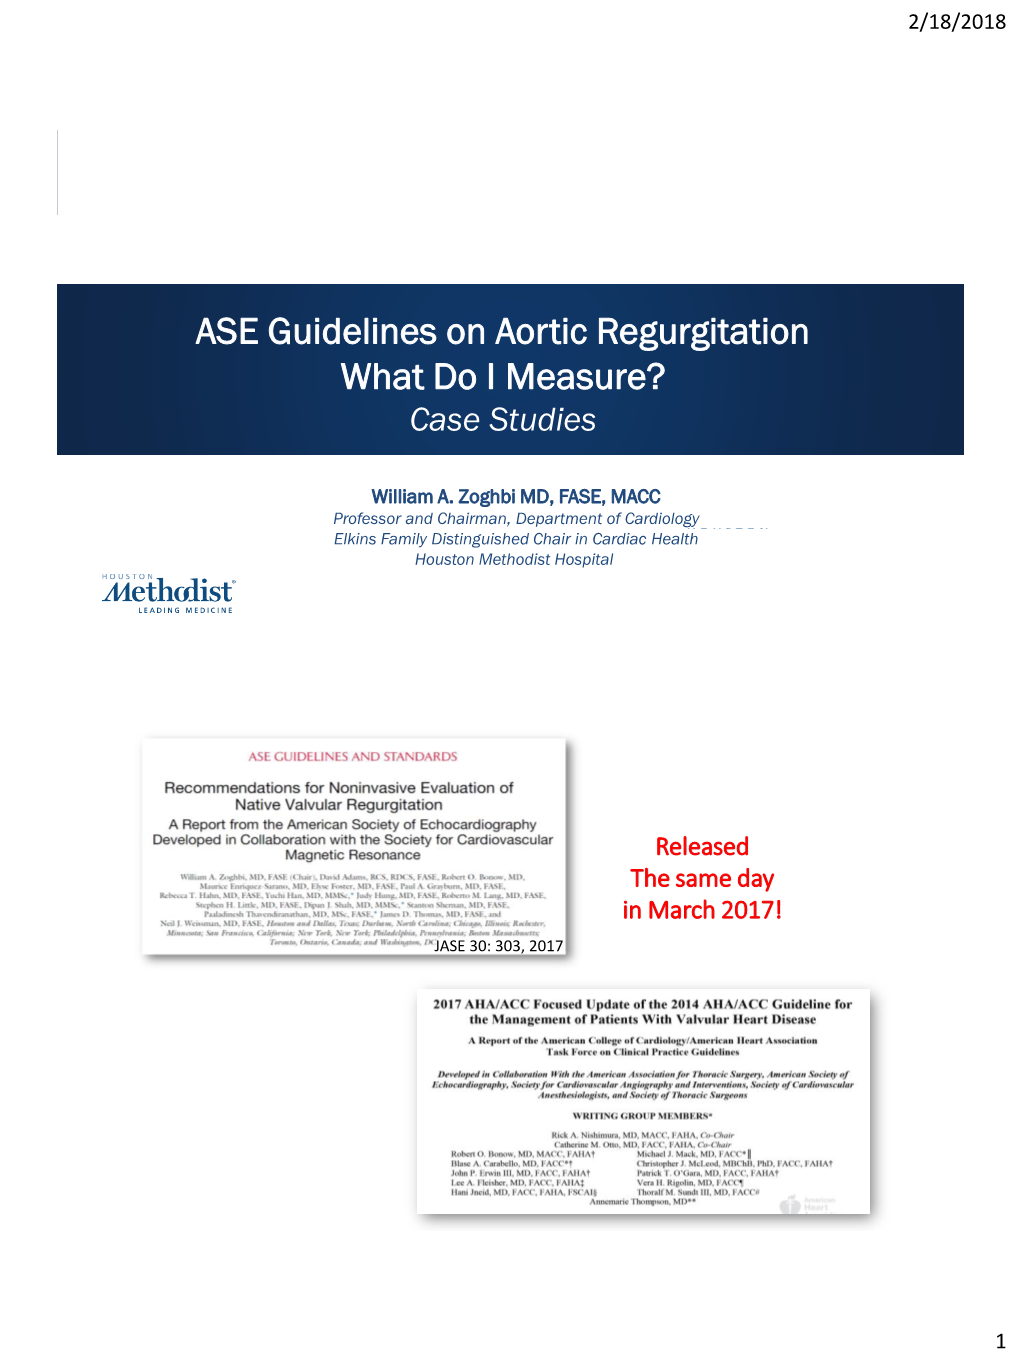 ASE Guidelines on Aortic Regurgitation What Do I Measure? Case Studies